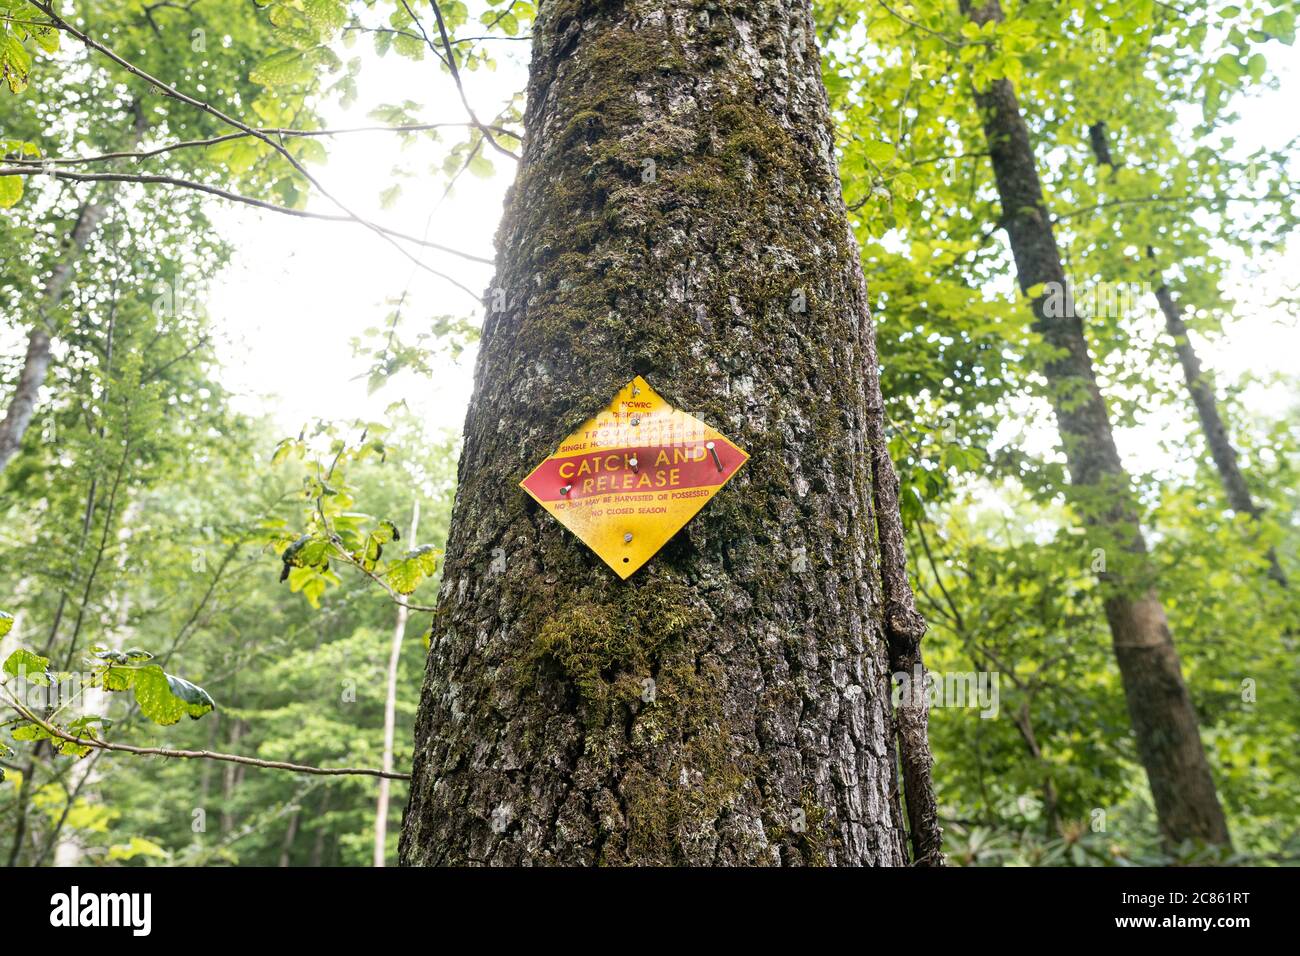 North Carolina/USA- July 14th 2020: A North Carolina fishing Catch and Release sign on a tree. Stock Photo